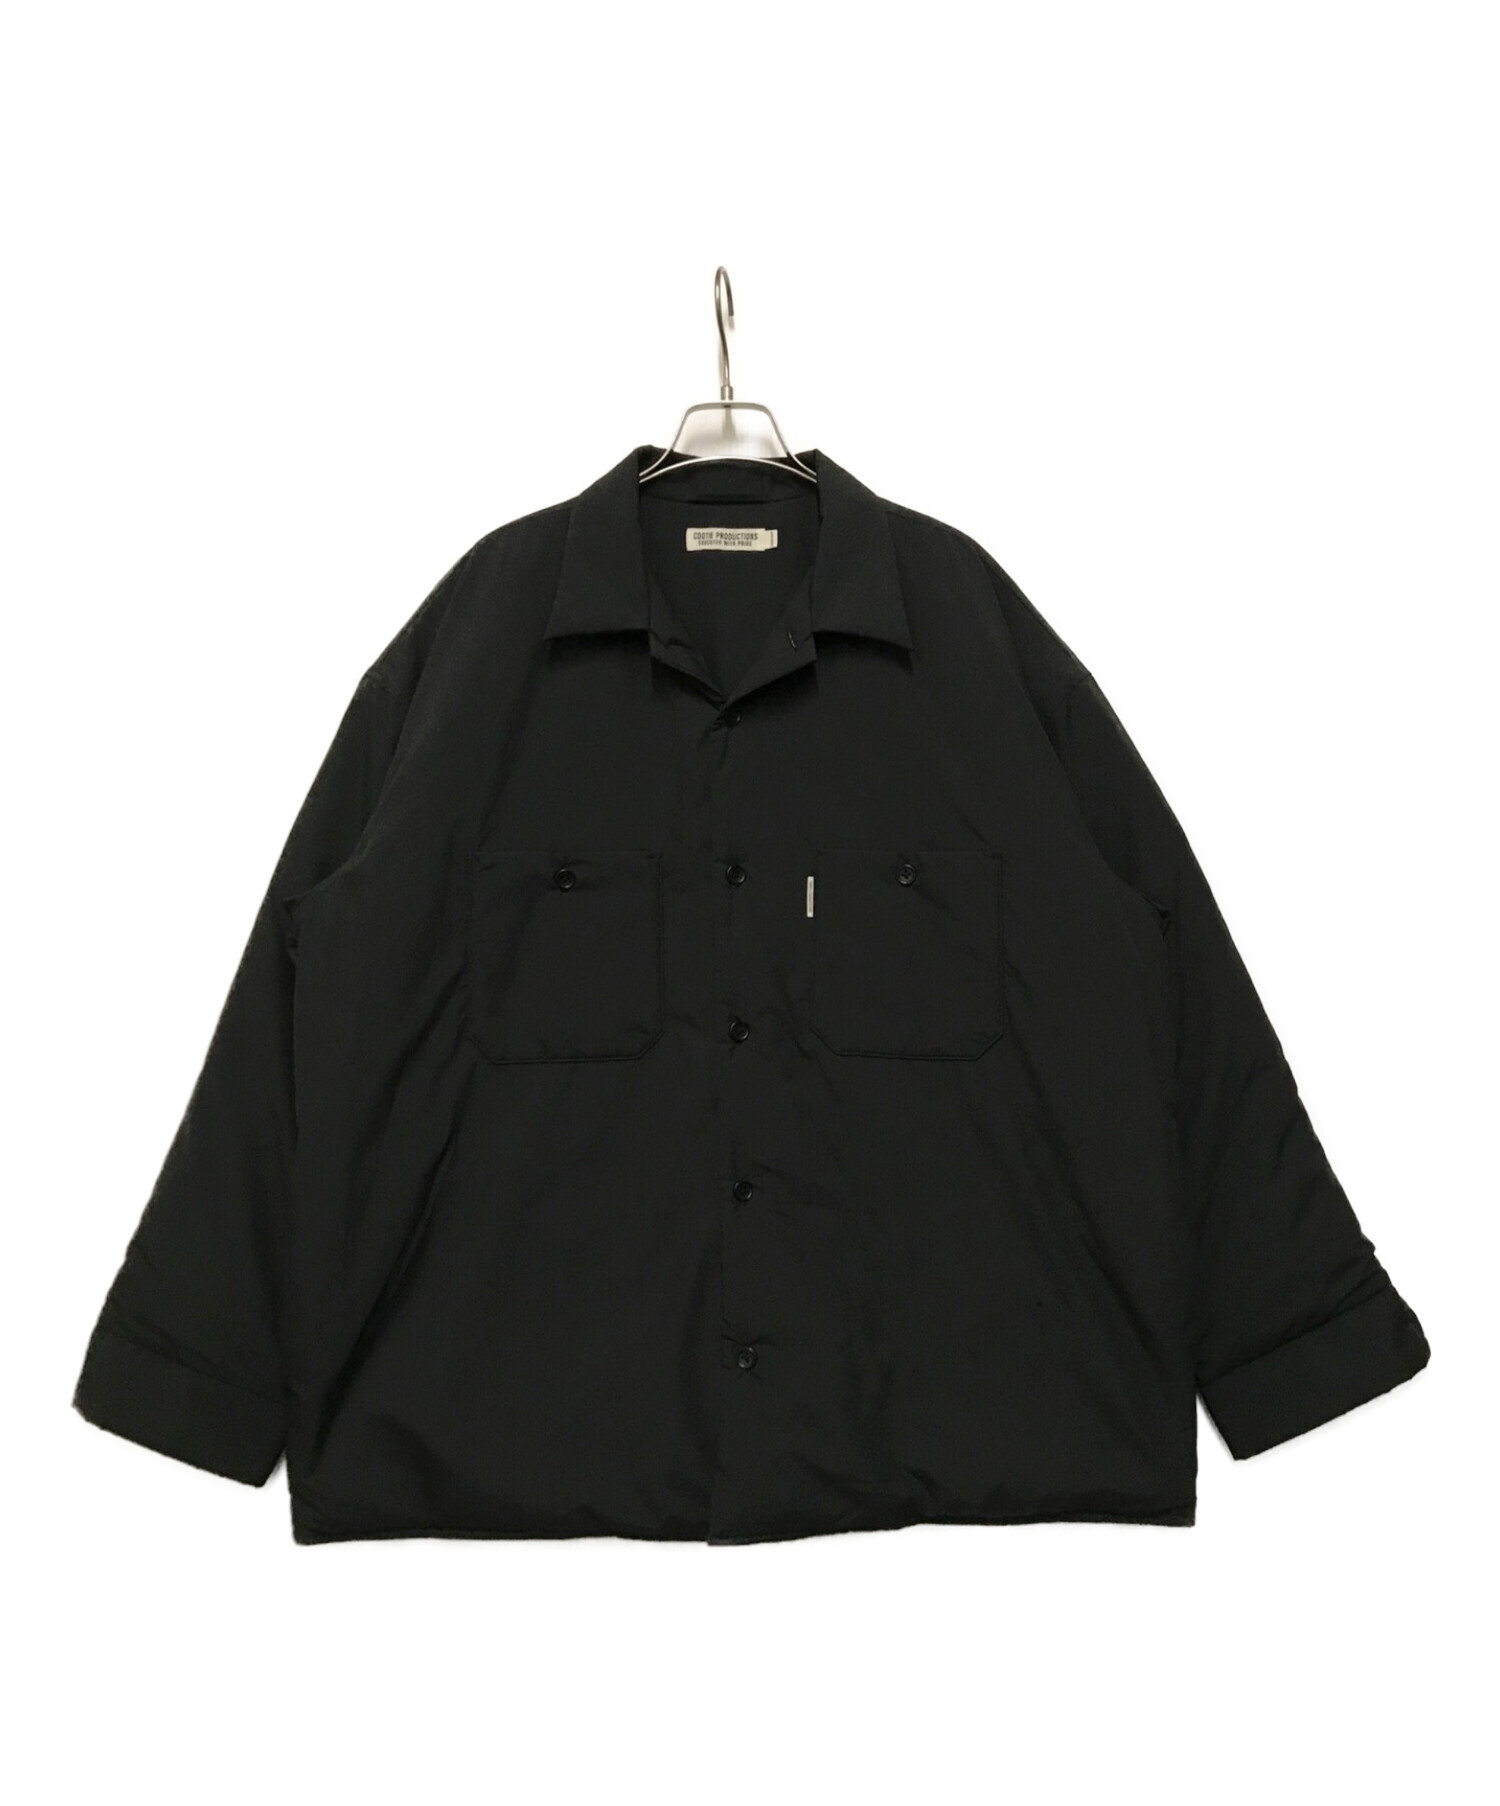 COOTIE PRODUCTIONS (クーティープロダクツ) Padded Error Fit Work Shirt Jacket ブラック  サイズ:Ⅿ